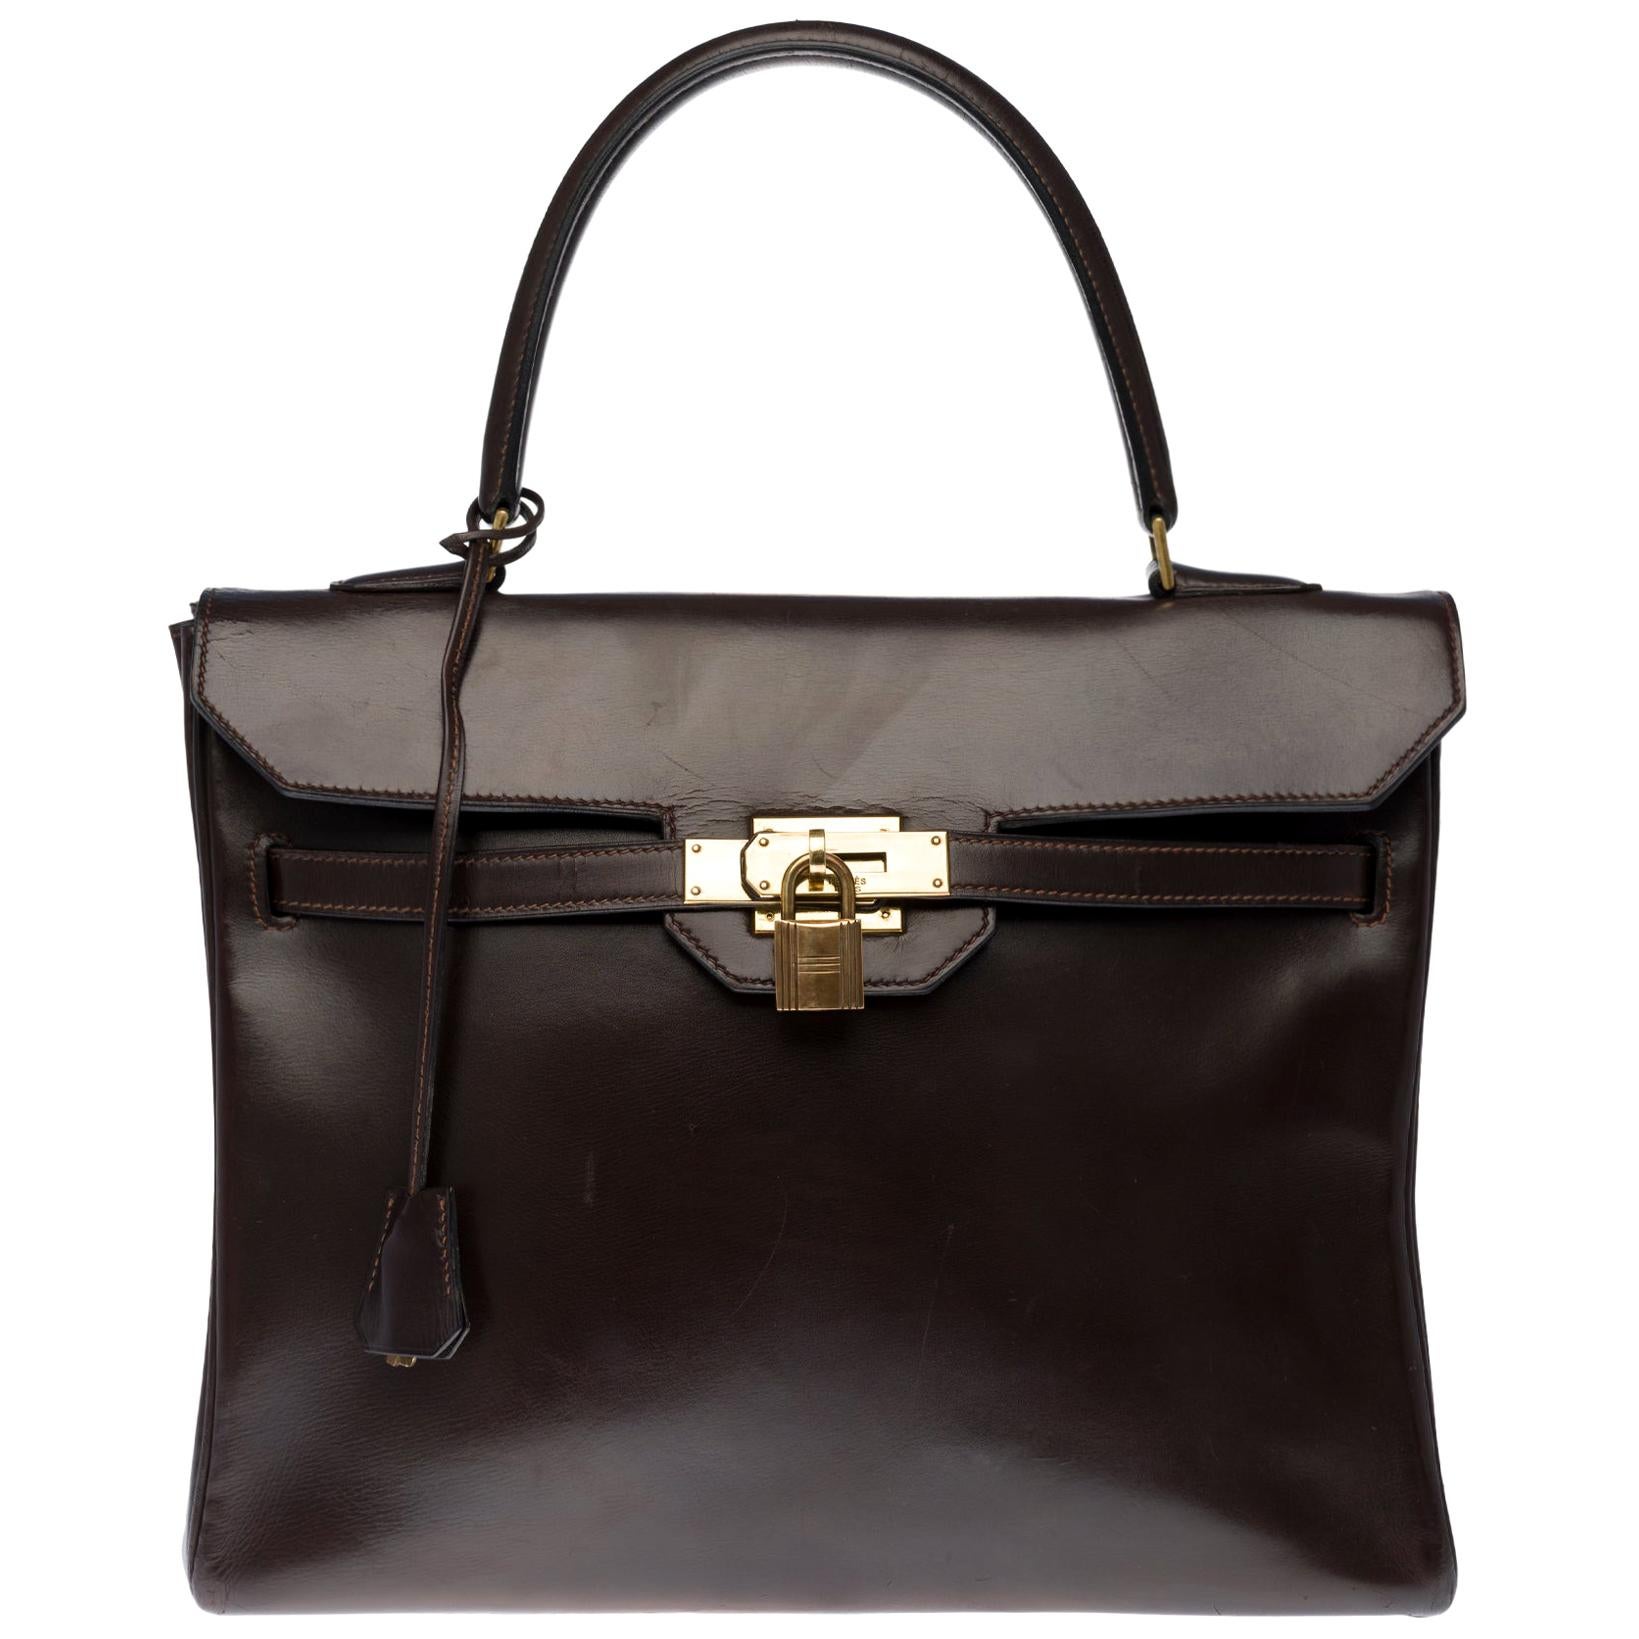 RARE Hermès Kelly Monaco 30cm handbag in brown box calfskin with Gold hardware